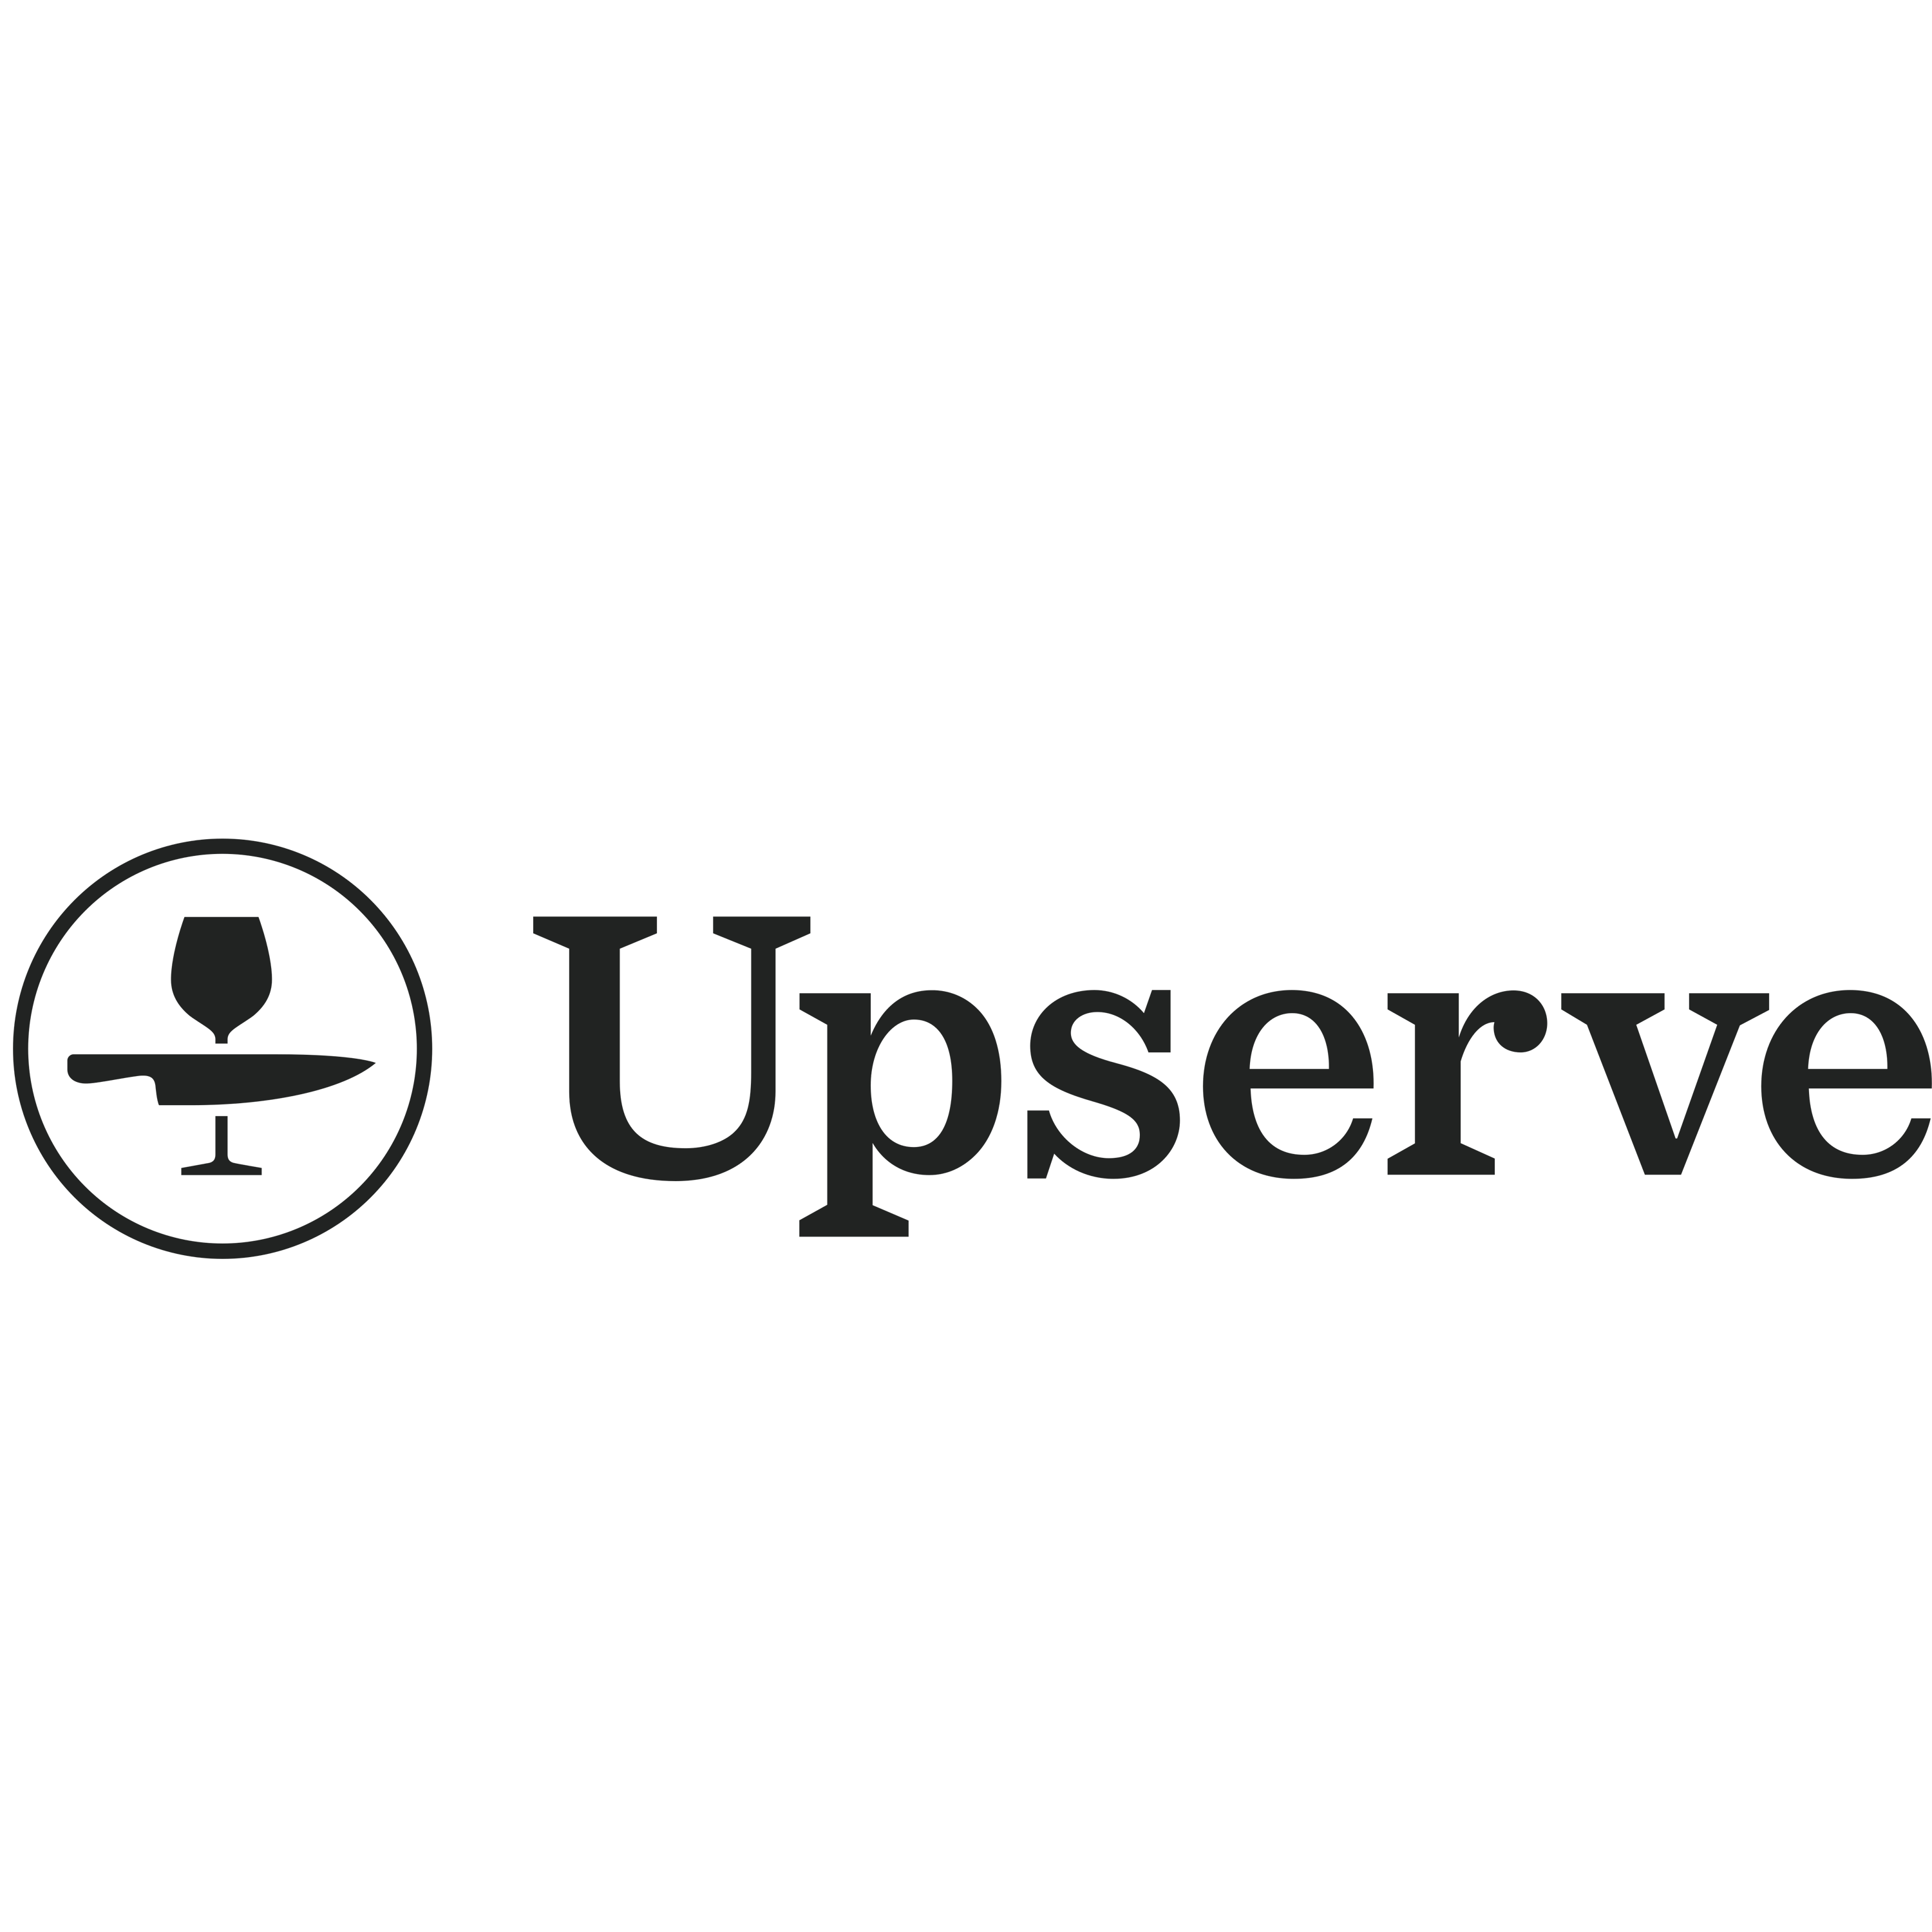 Upserve Logo Transparent Image